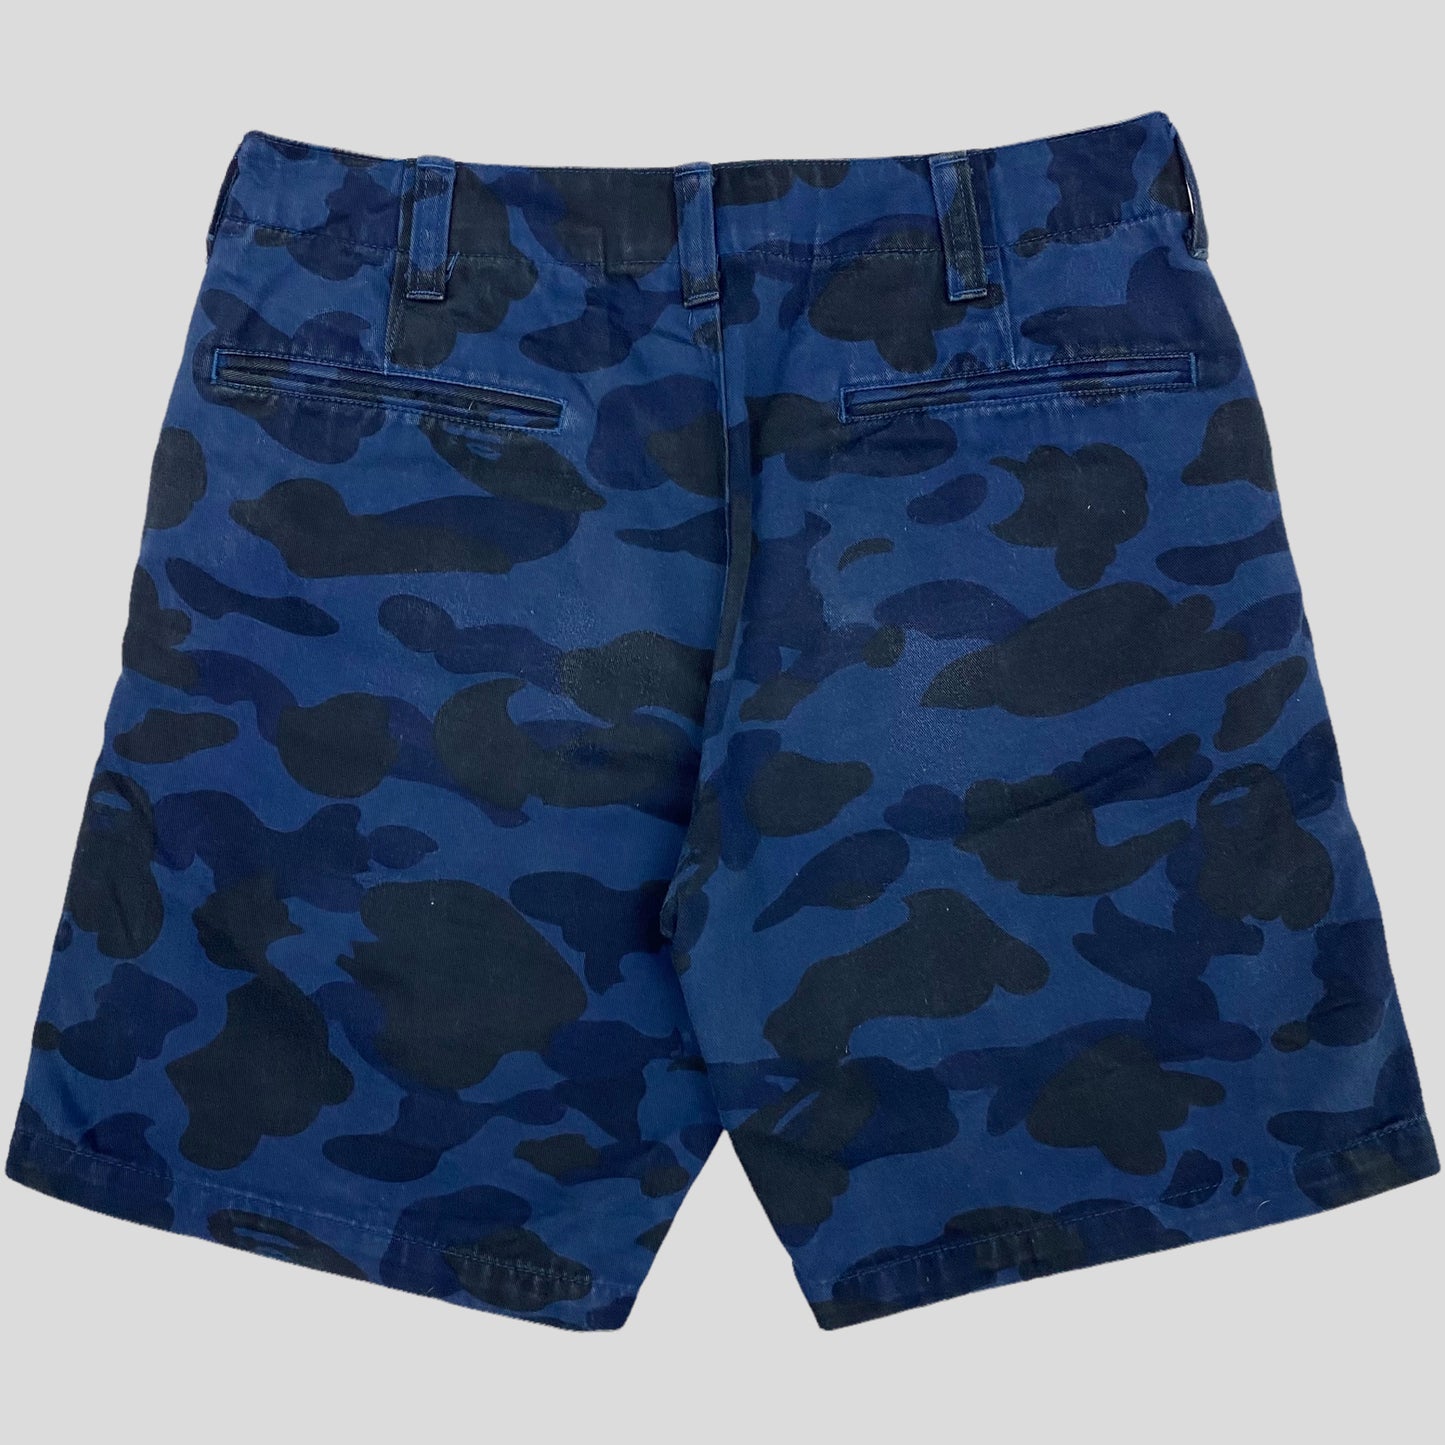 Bape 00’s Blue Camo Shorts - W30